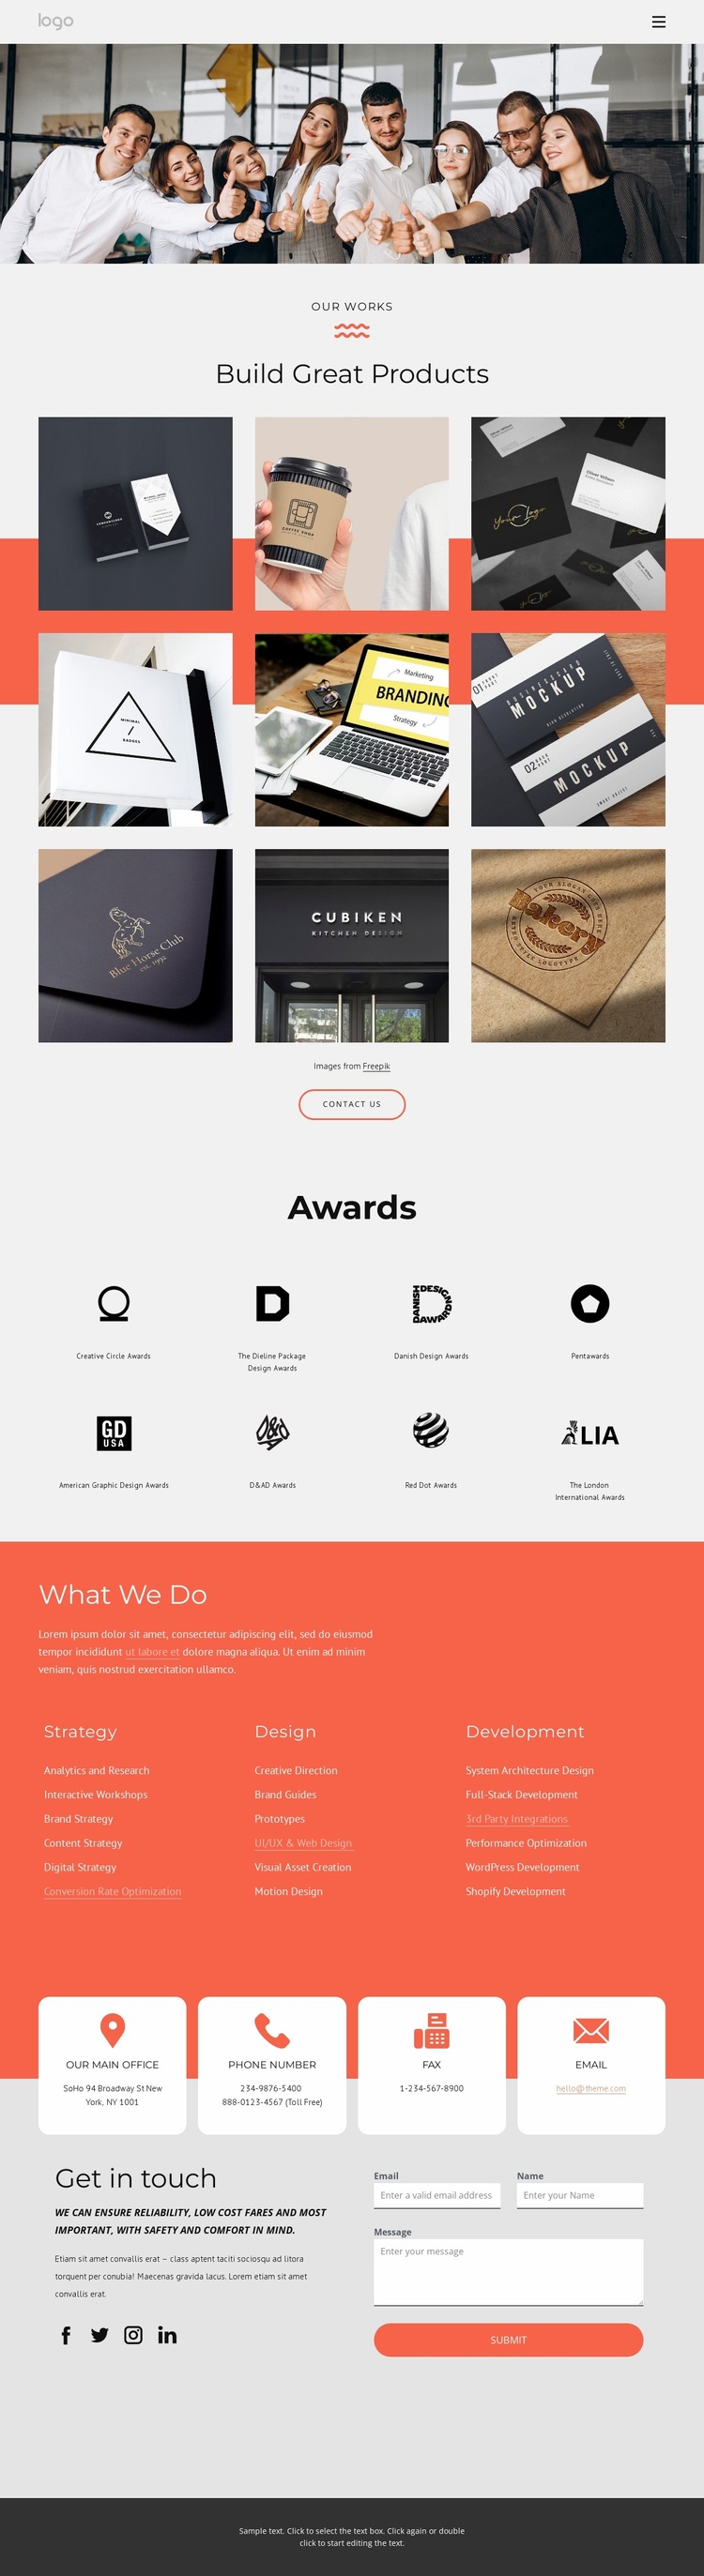 Award winning branding services Website Design